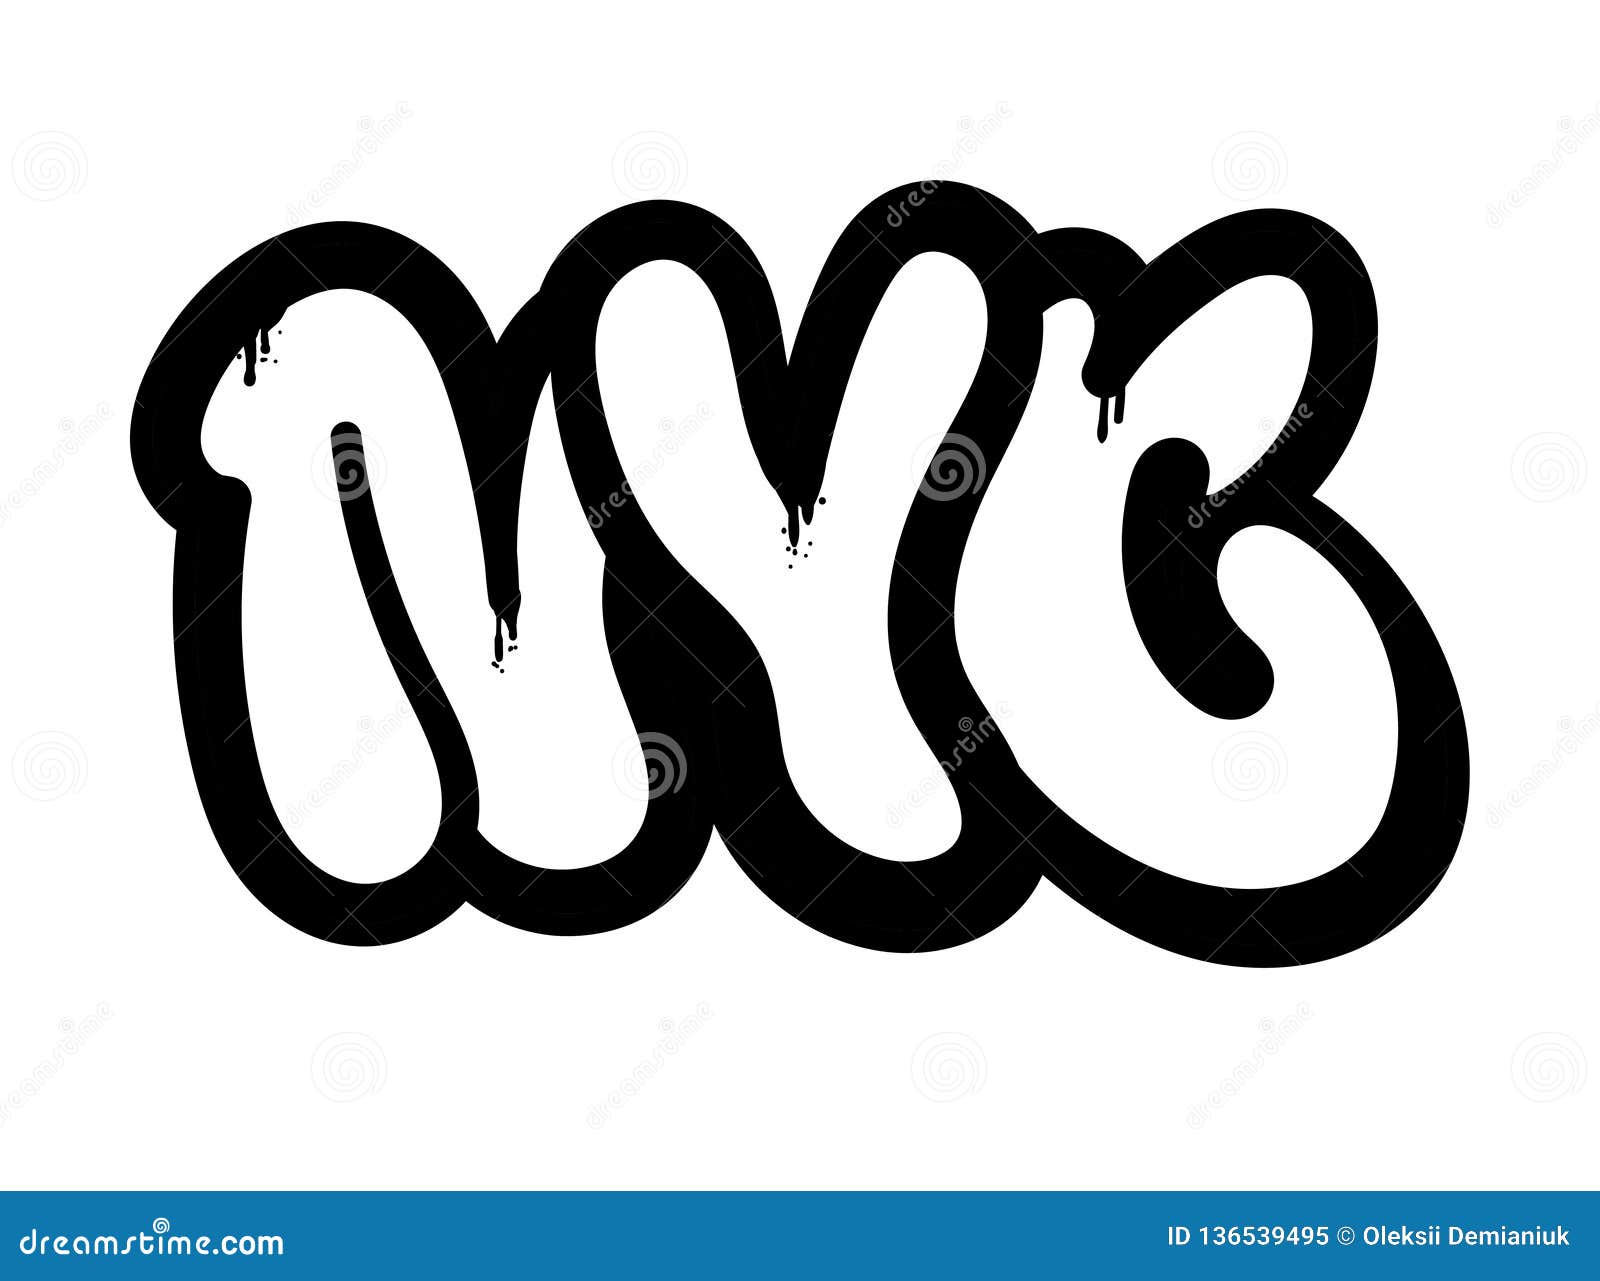 Black Words on White Ny City Souvenir Nyc Cool Urban Graffiti Font Pattern Single Toggle Switch 3dRose lsp_157616_1 New York Text Design 